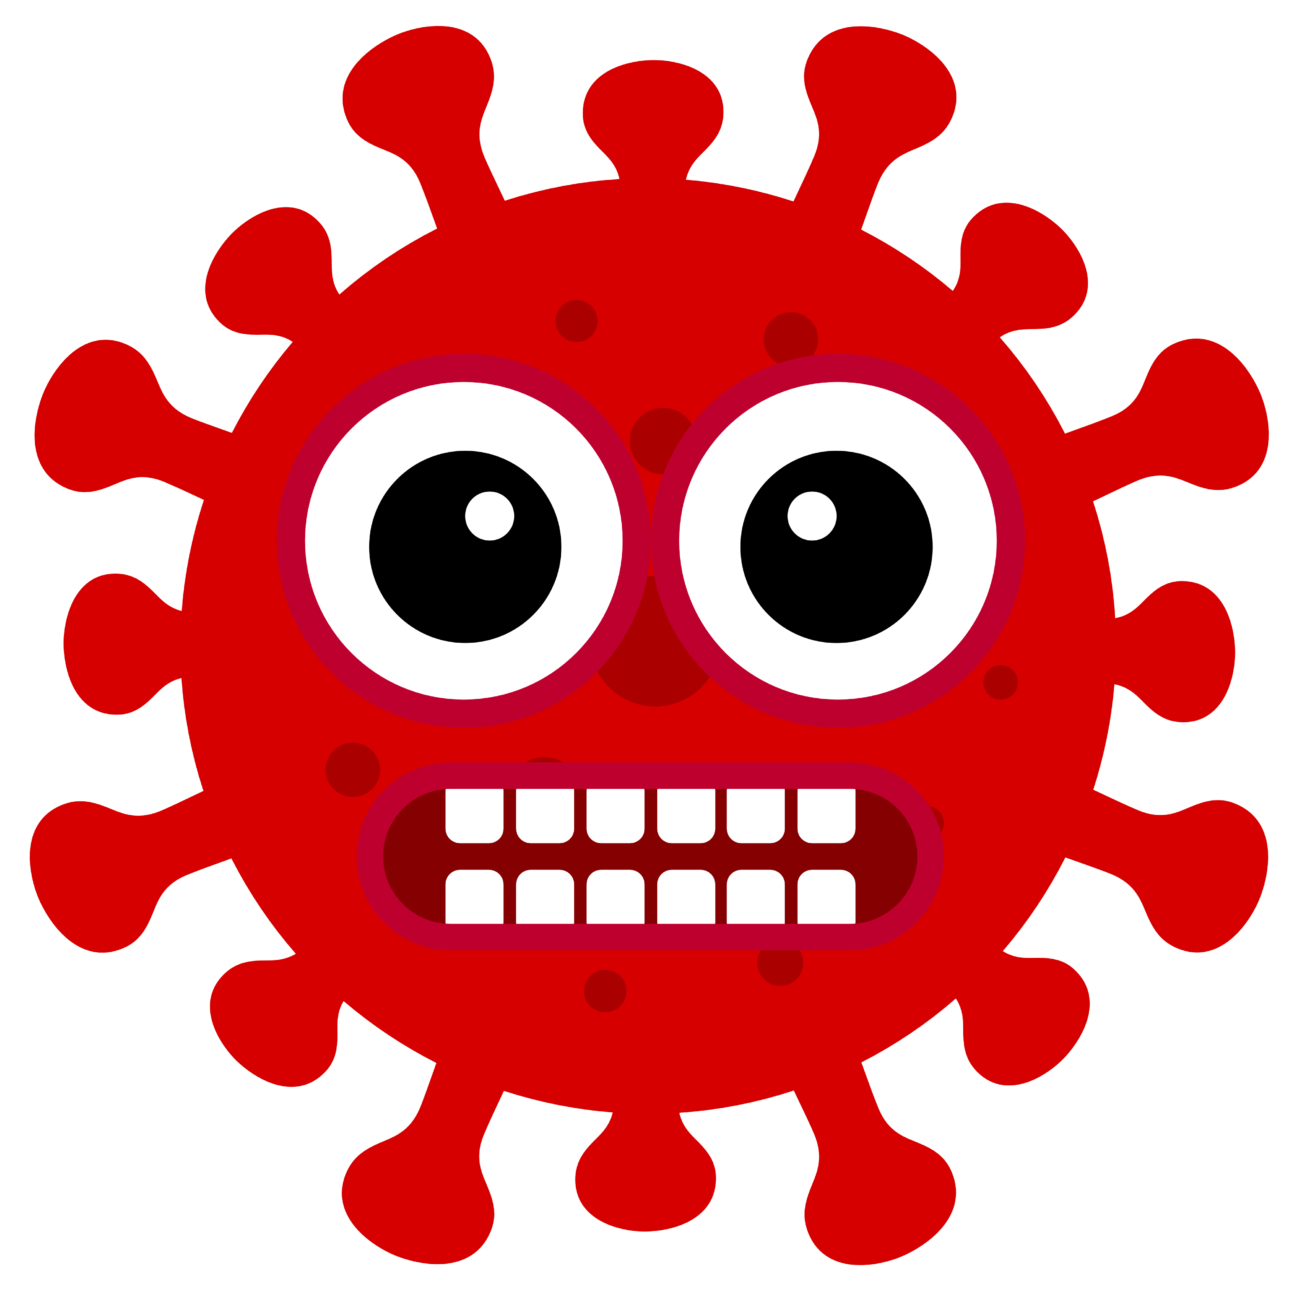 Gratis Download von iXimus.de: Coronavirus, rot, Mundschutz, Corona, Covid-19, Virus, SARS-CoV-2, freigestellt, Vektor-Datei, #000169